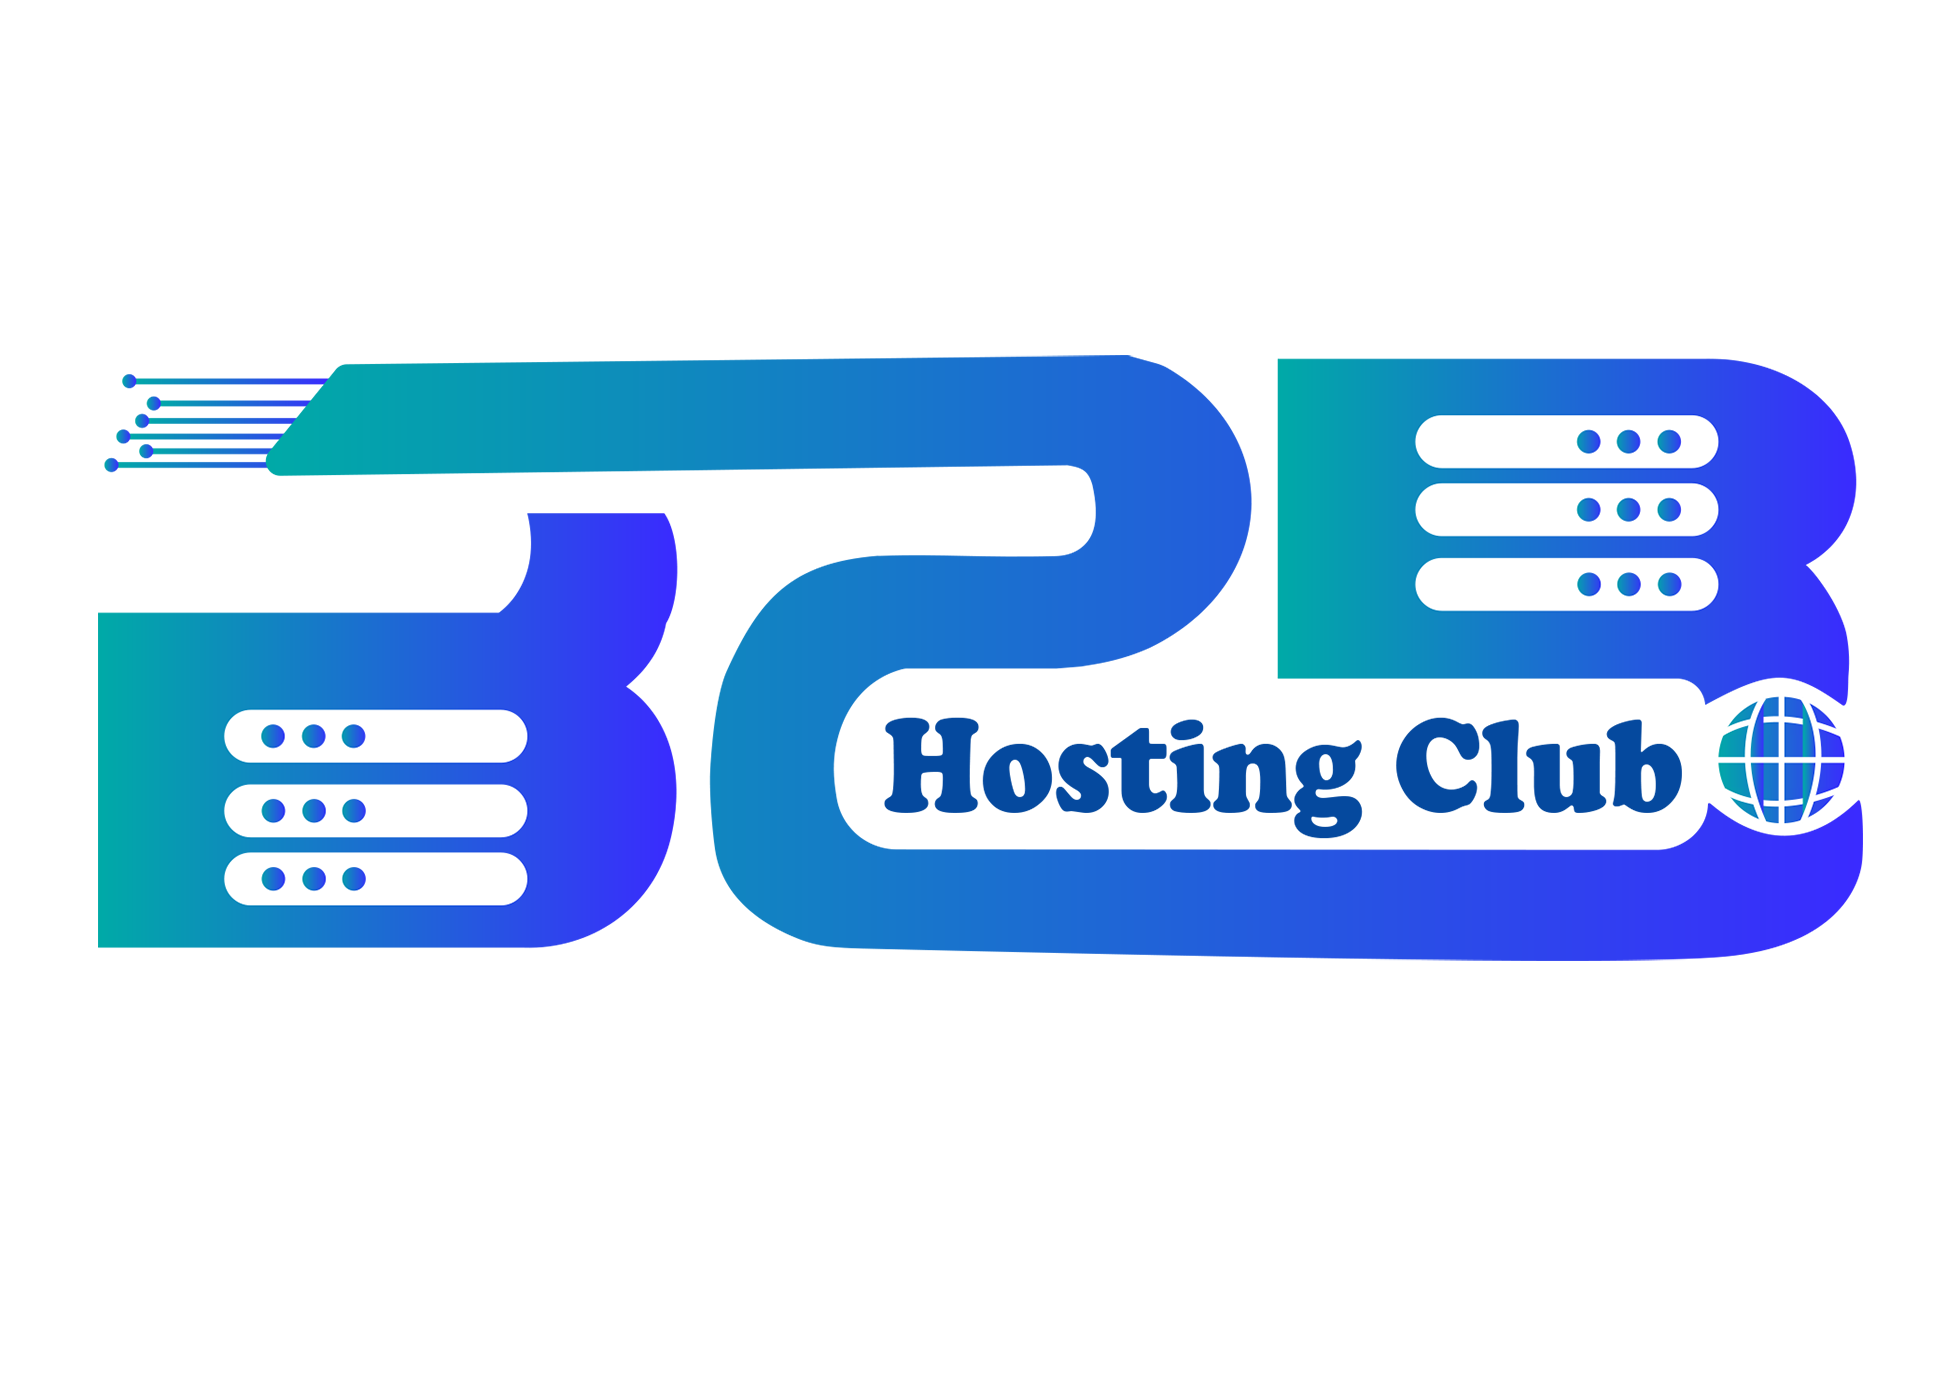 b2b logo